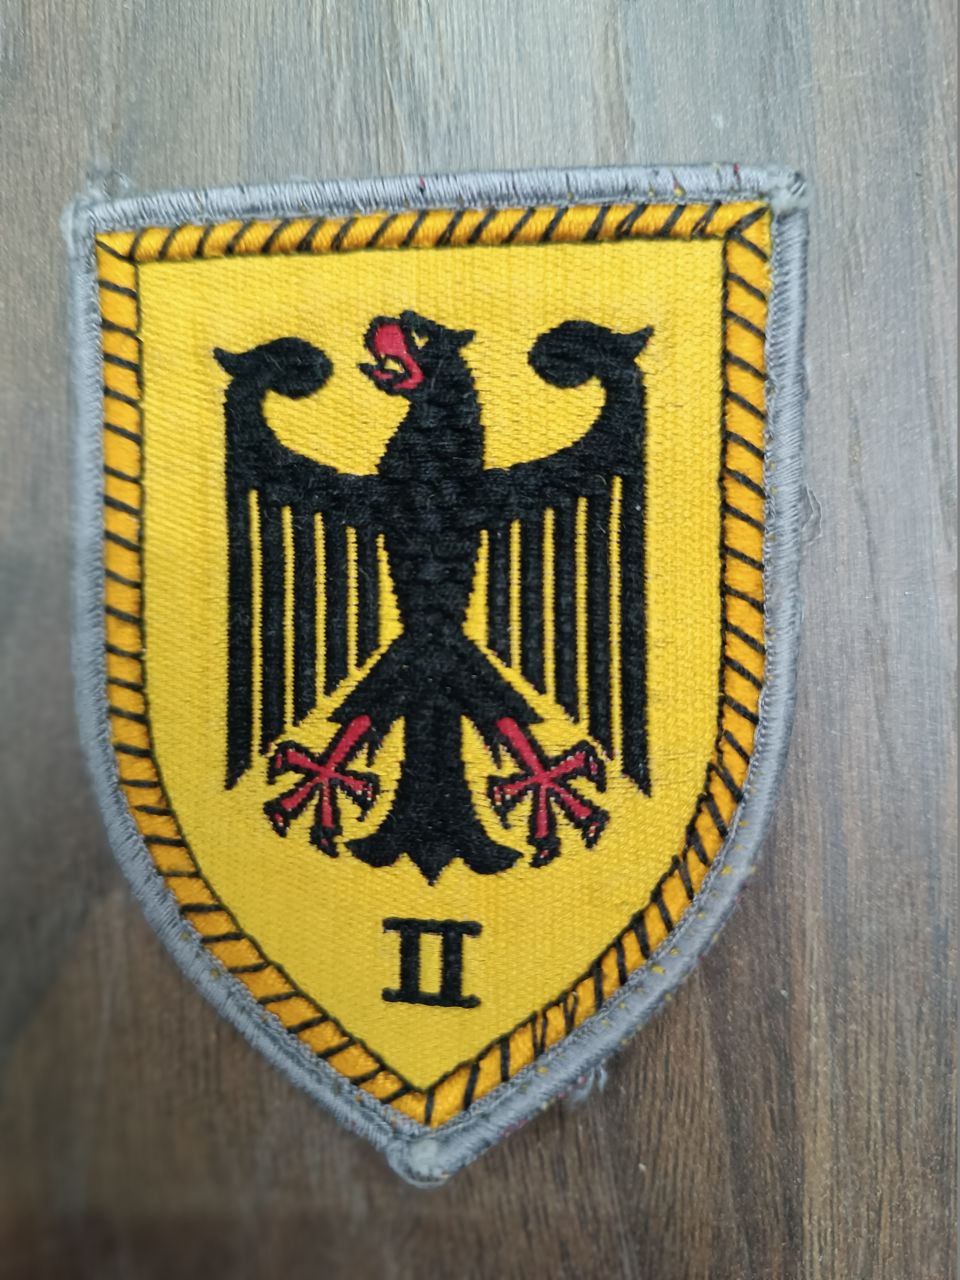 Bundeswehr insignia